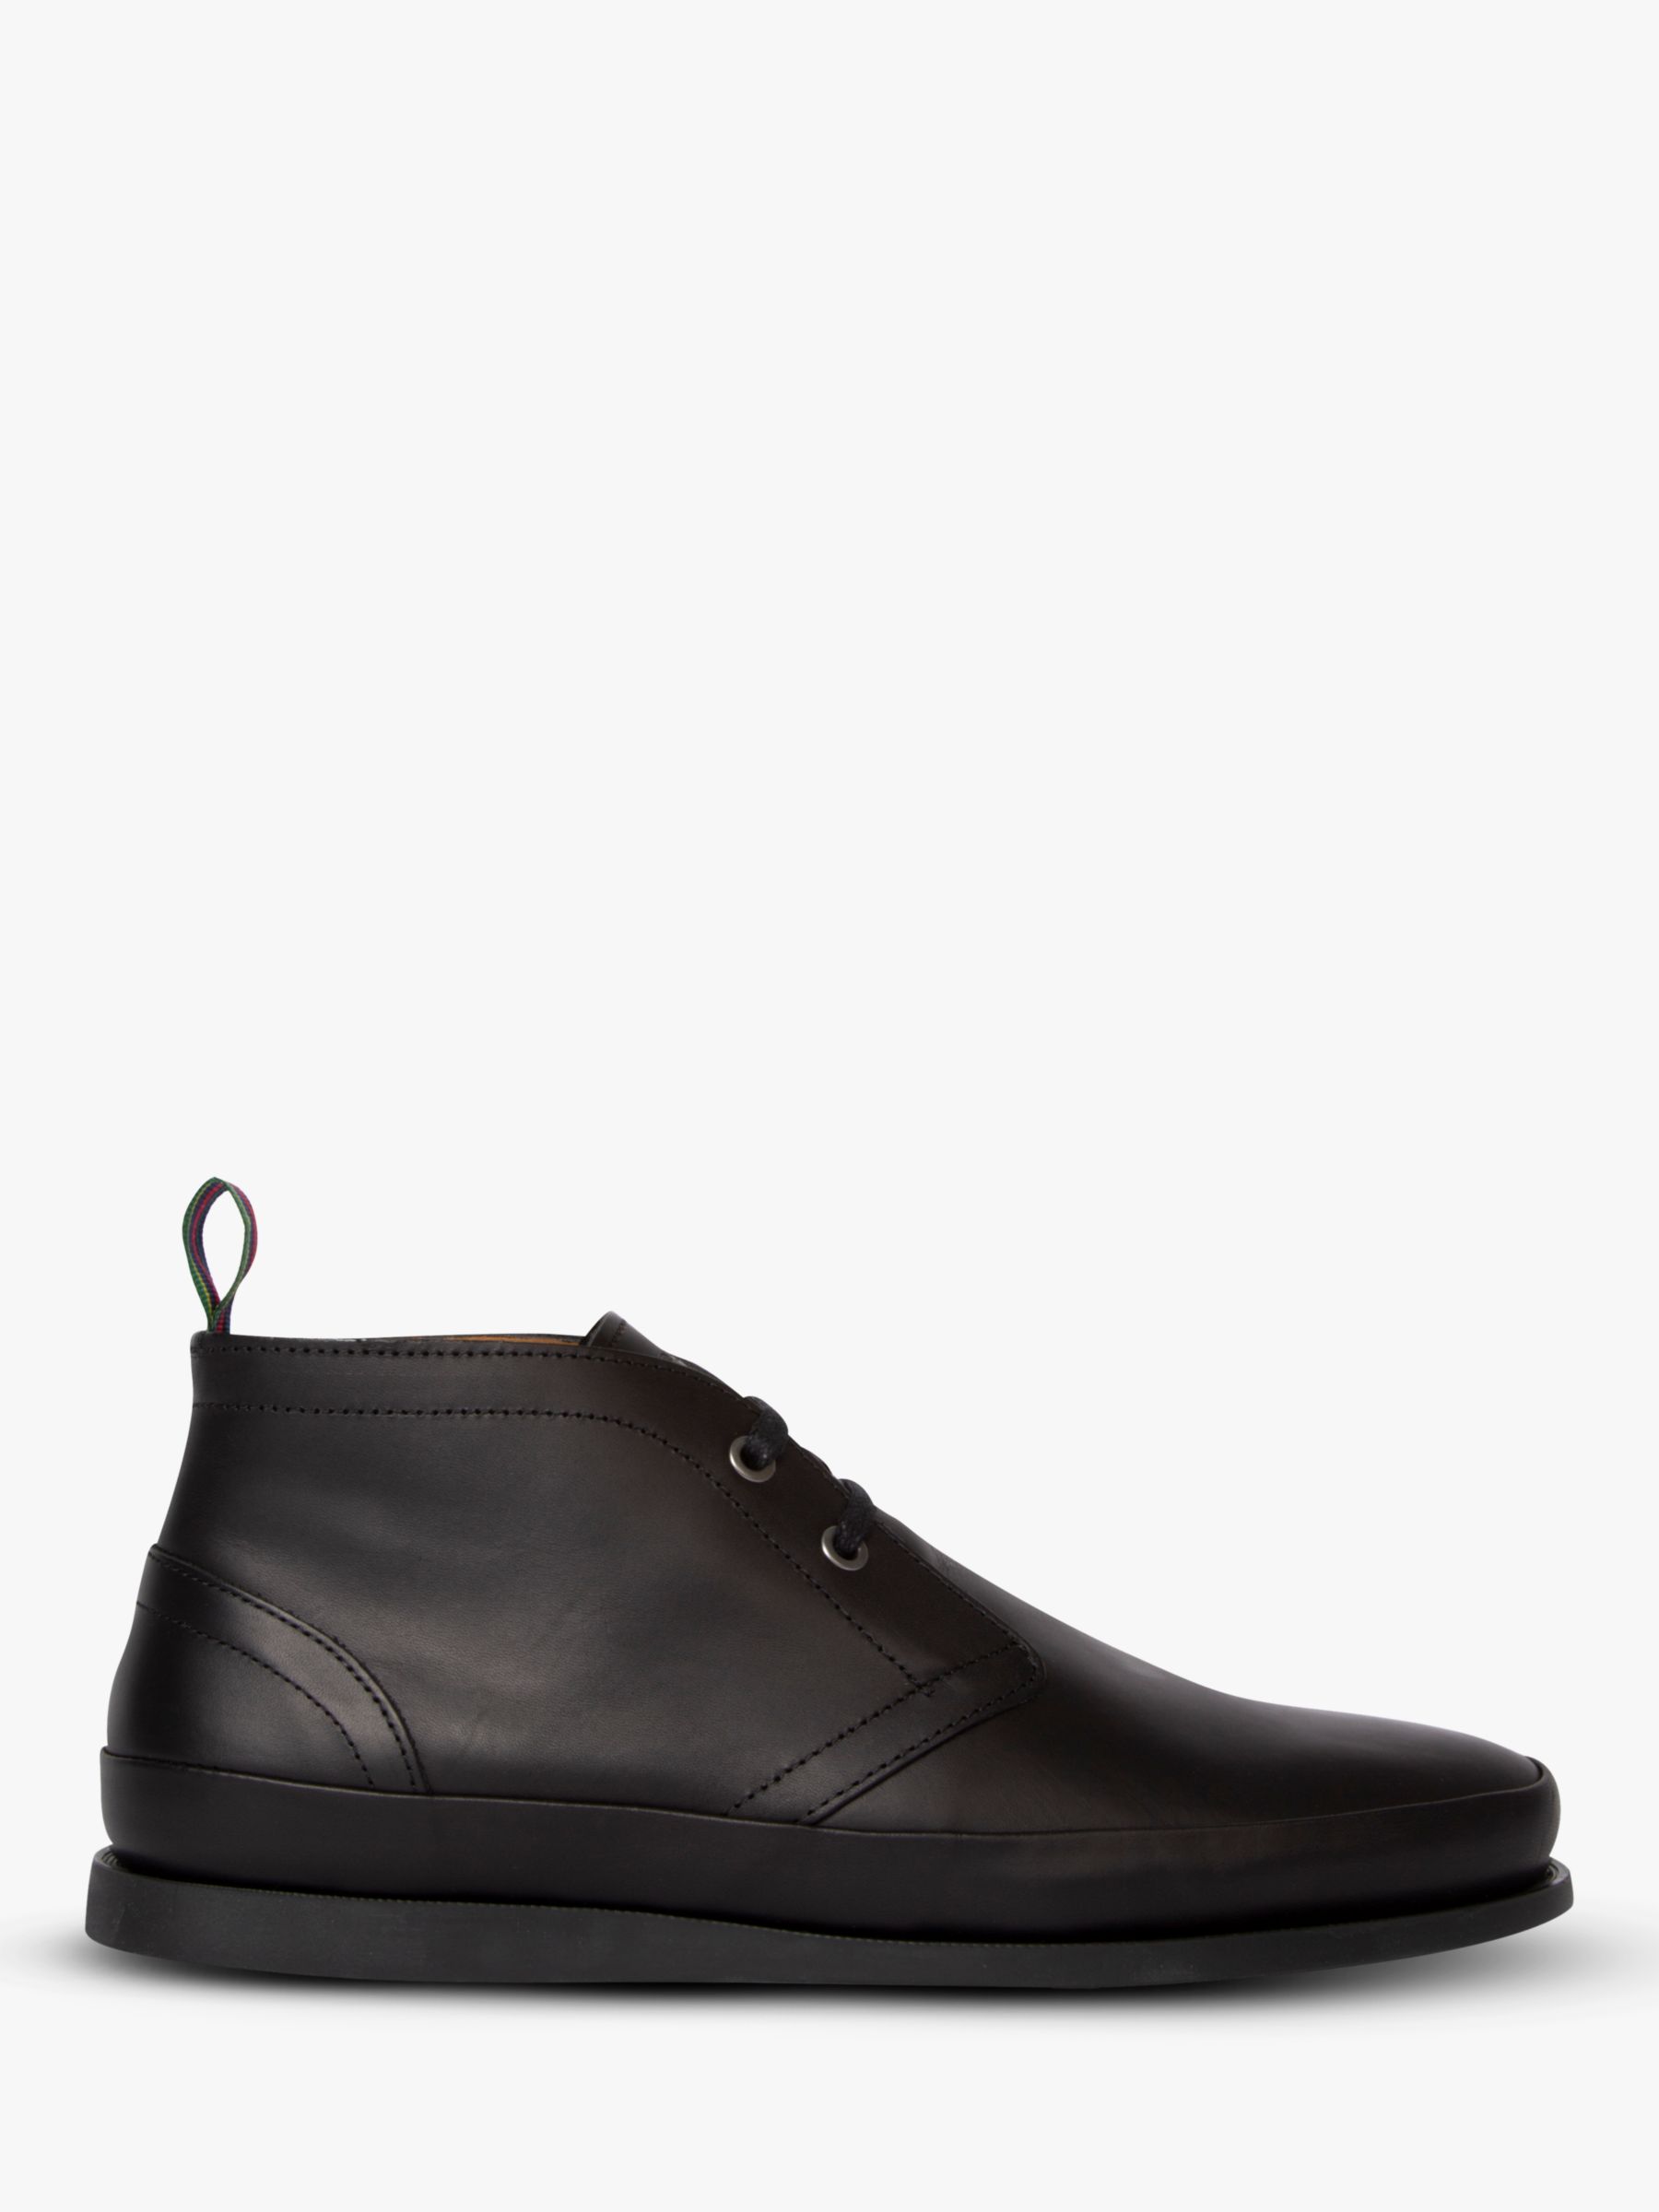 PS Paul Smith Cleon Chukka Leather Boots, Black